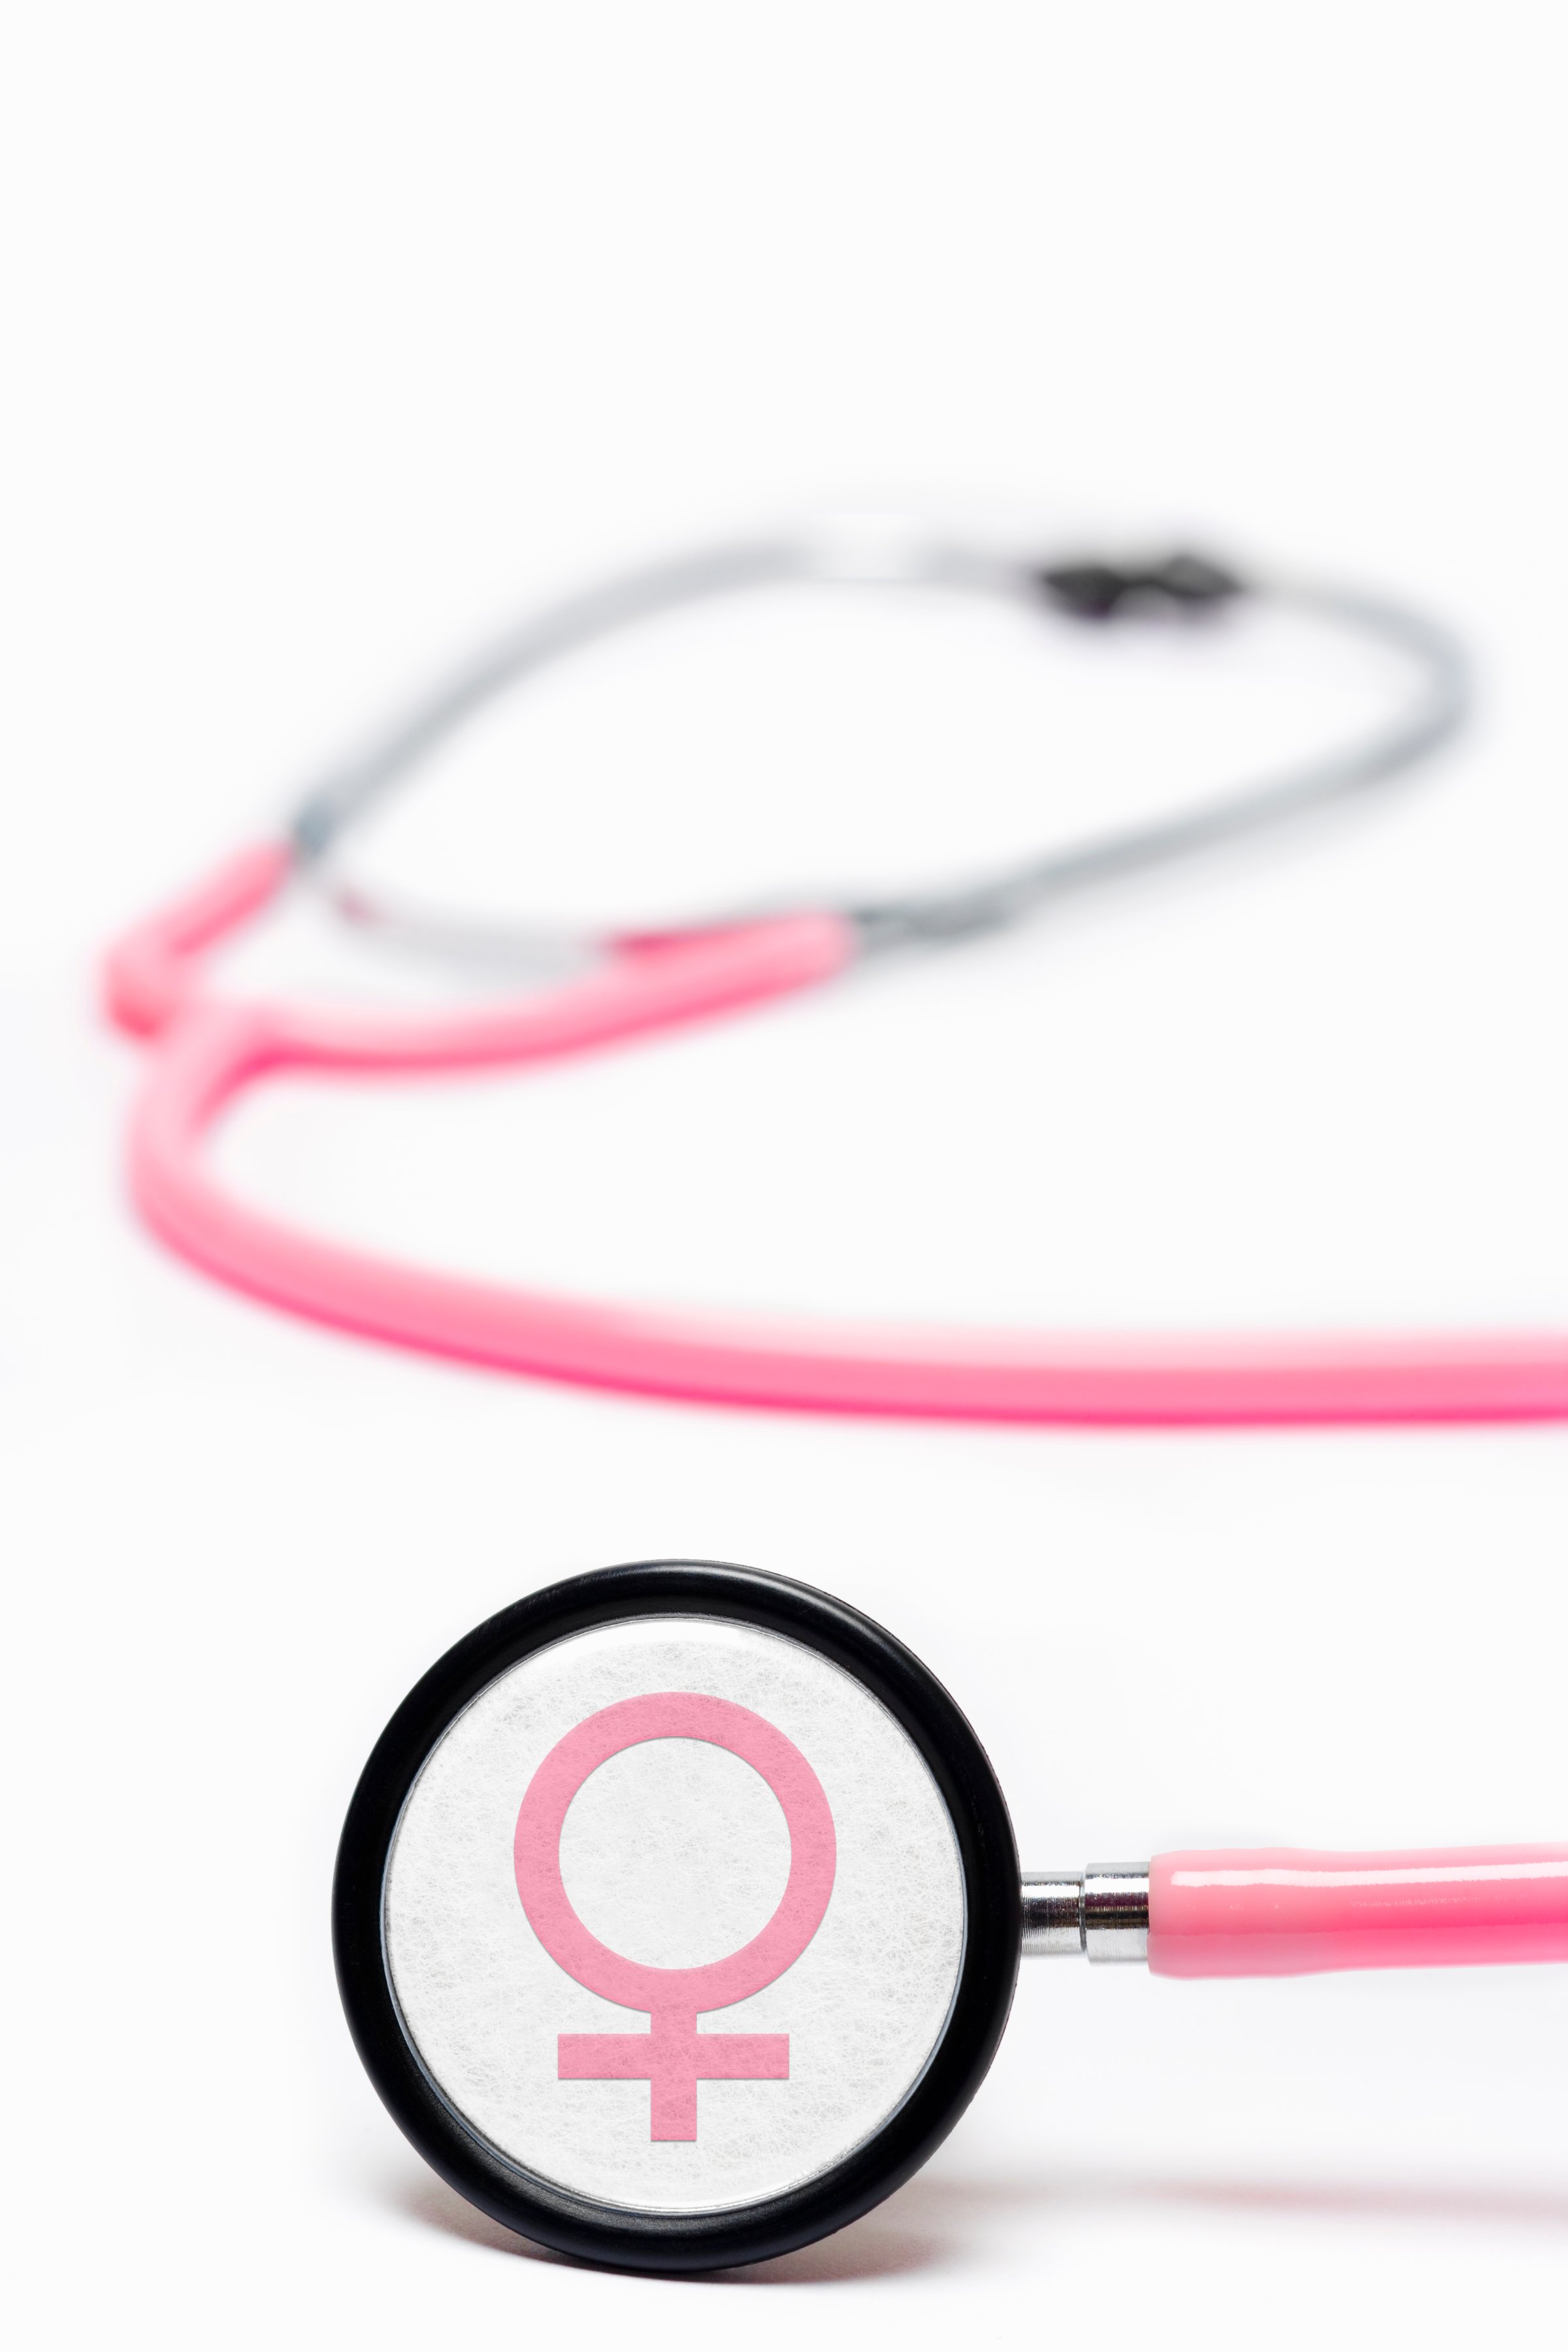 Pink stethoscope with female symbol